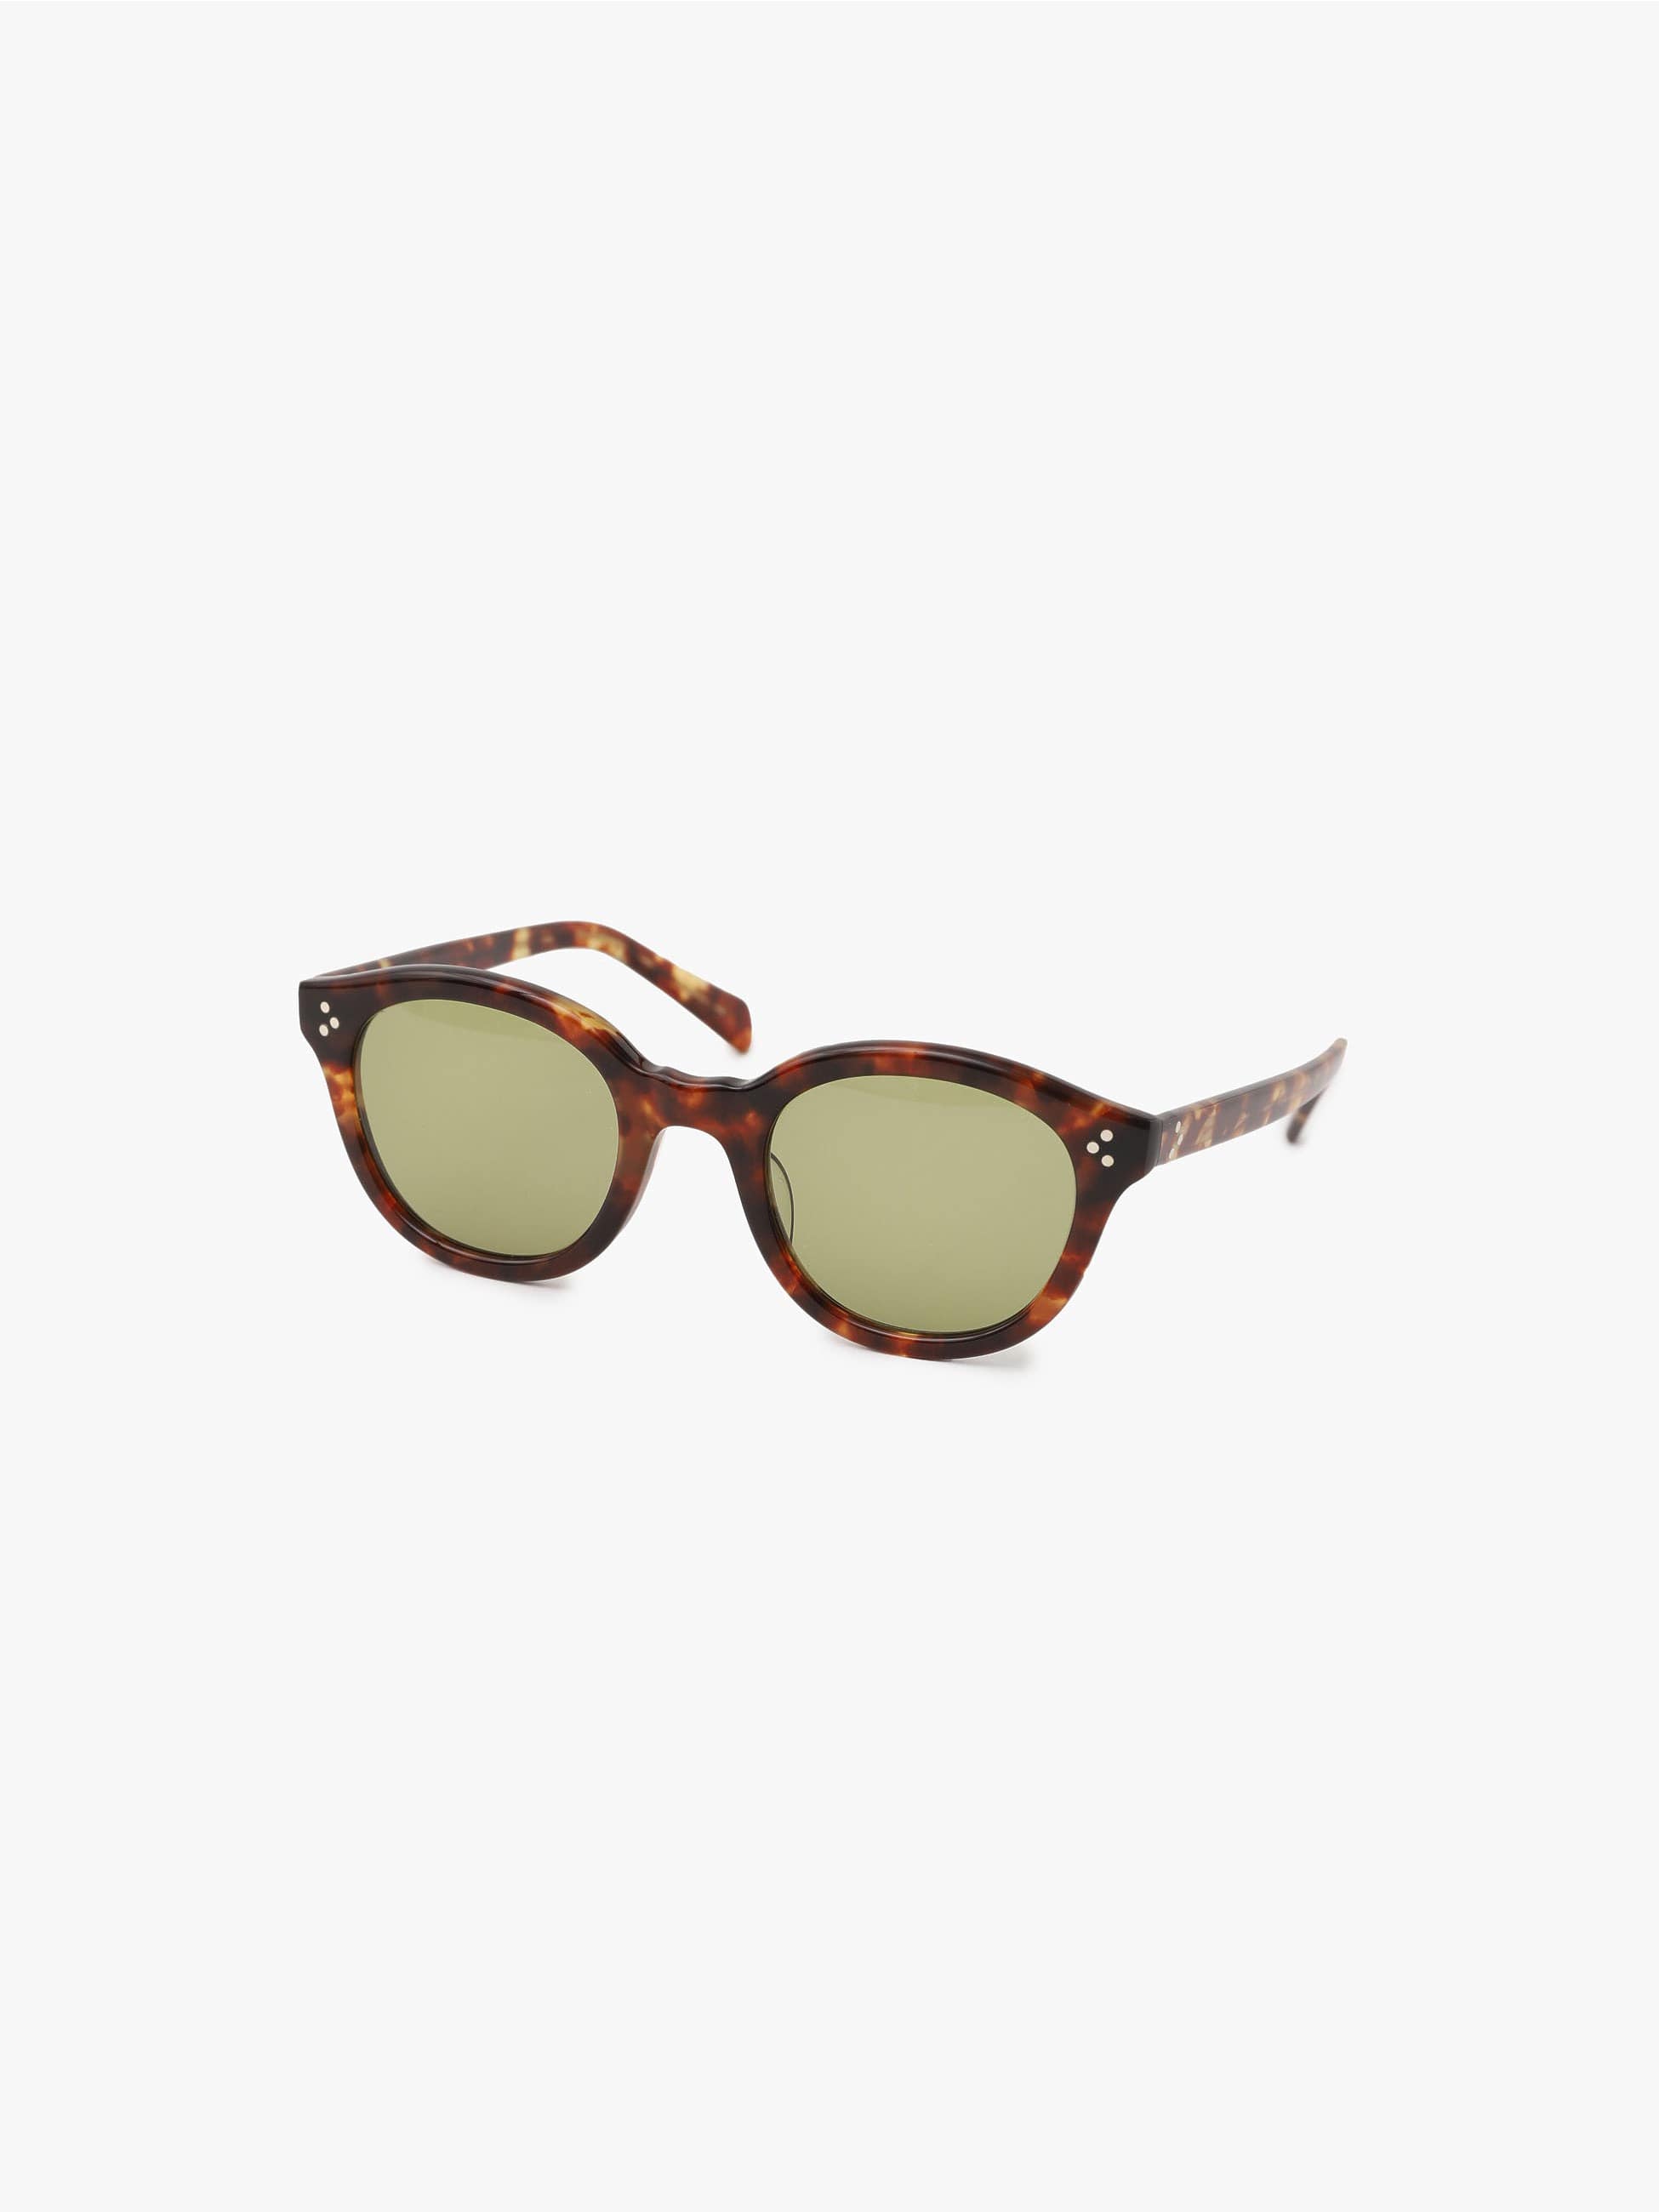 Sunglasses (RH-15 brown)